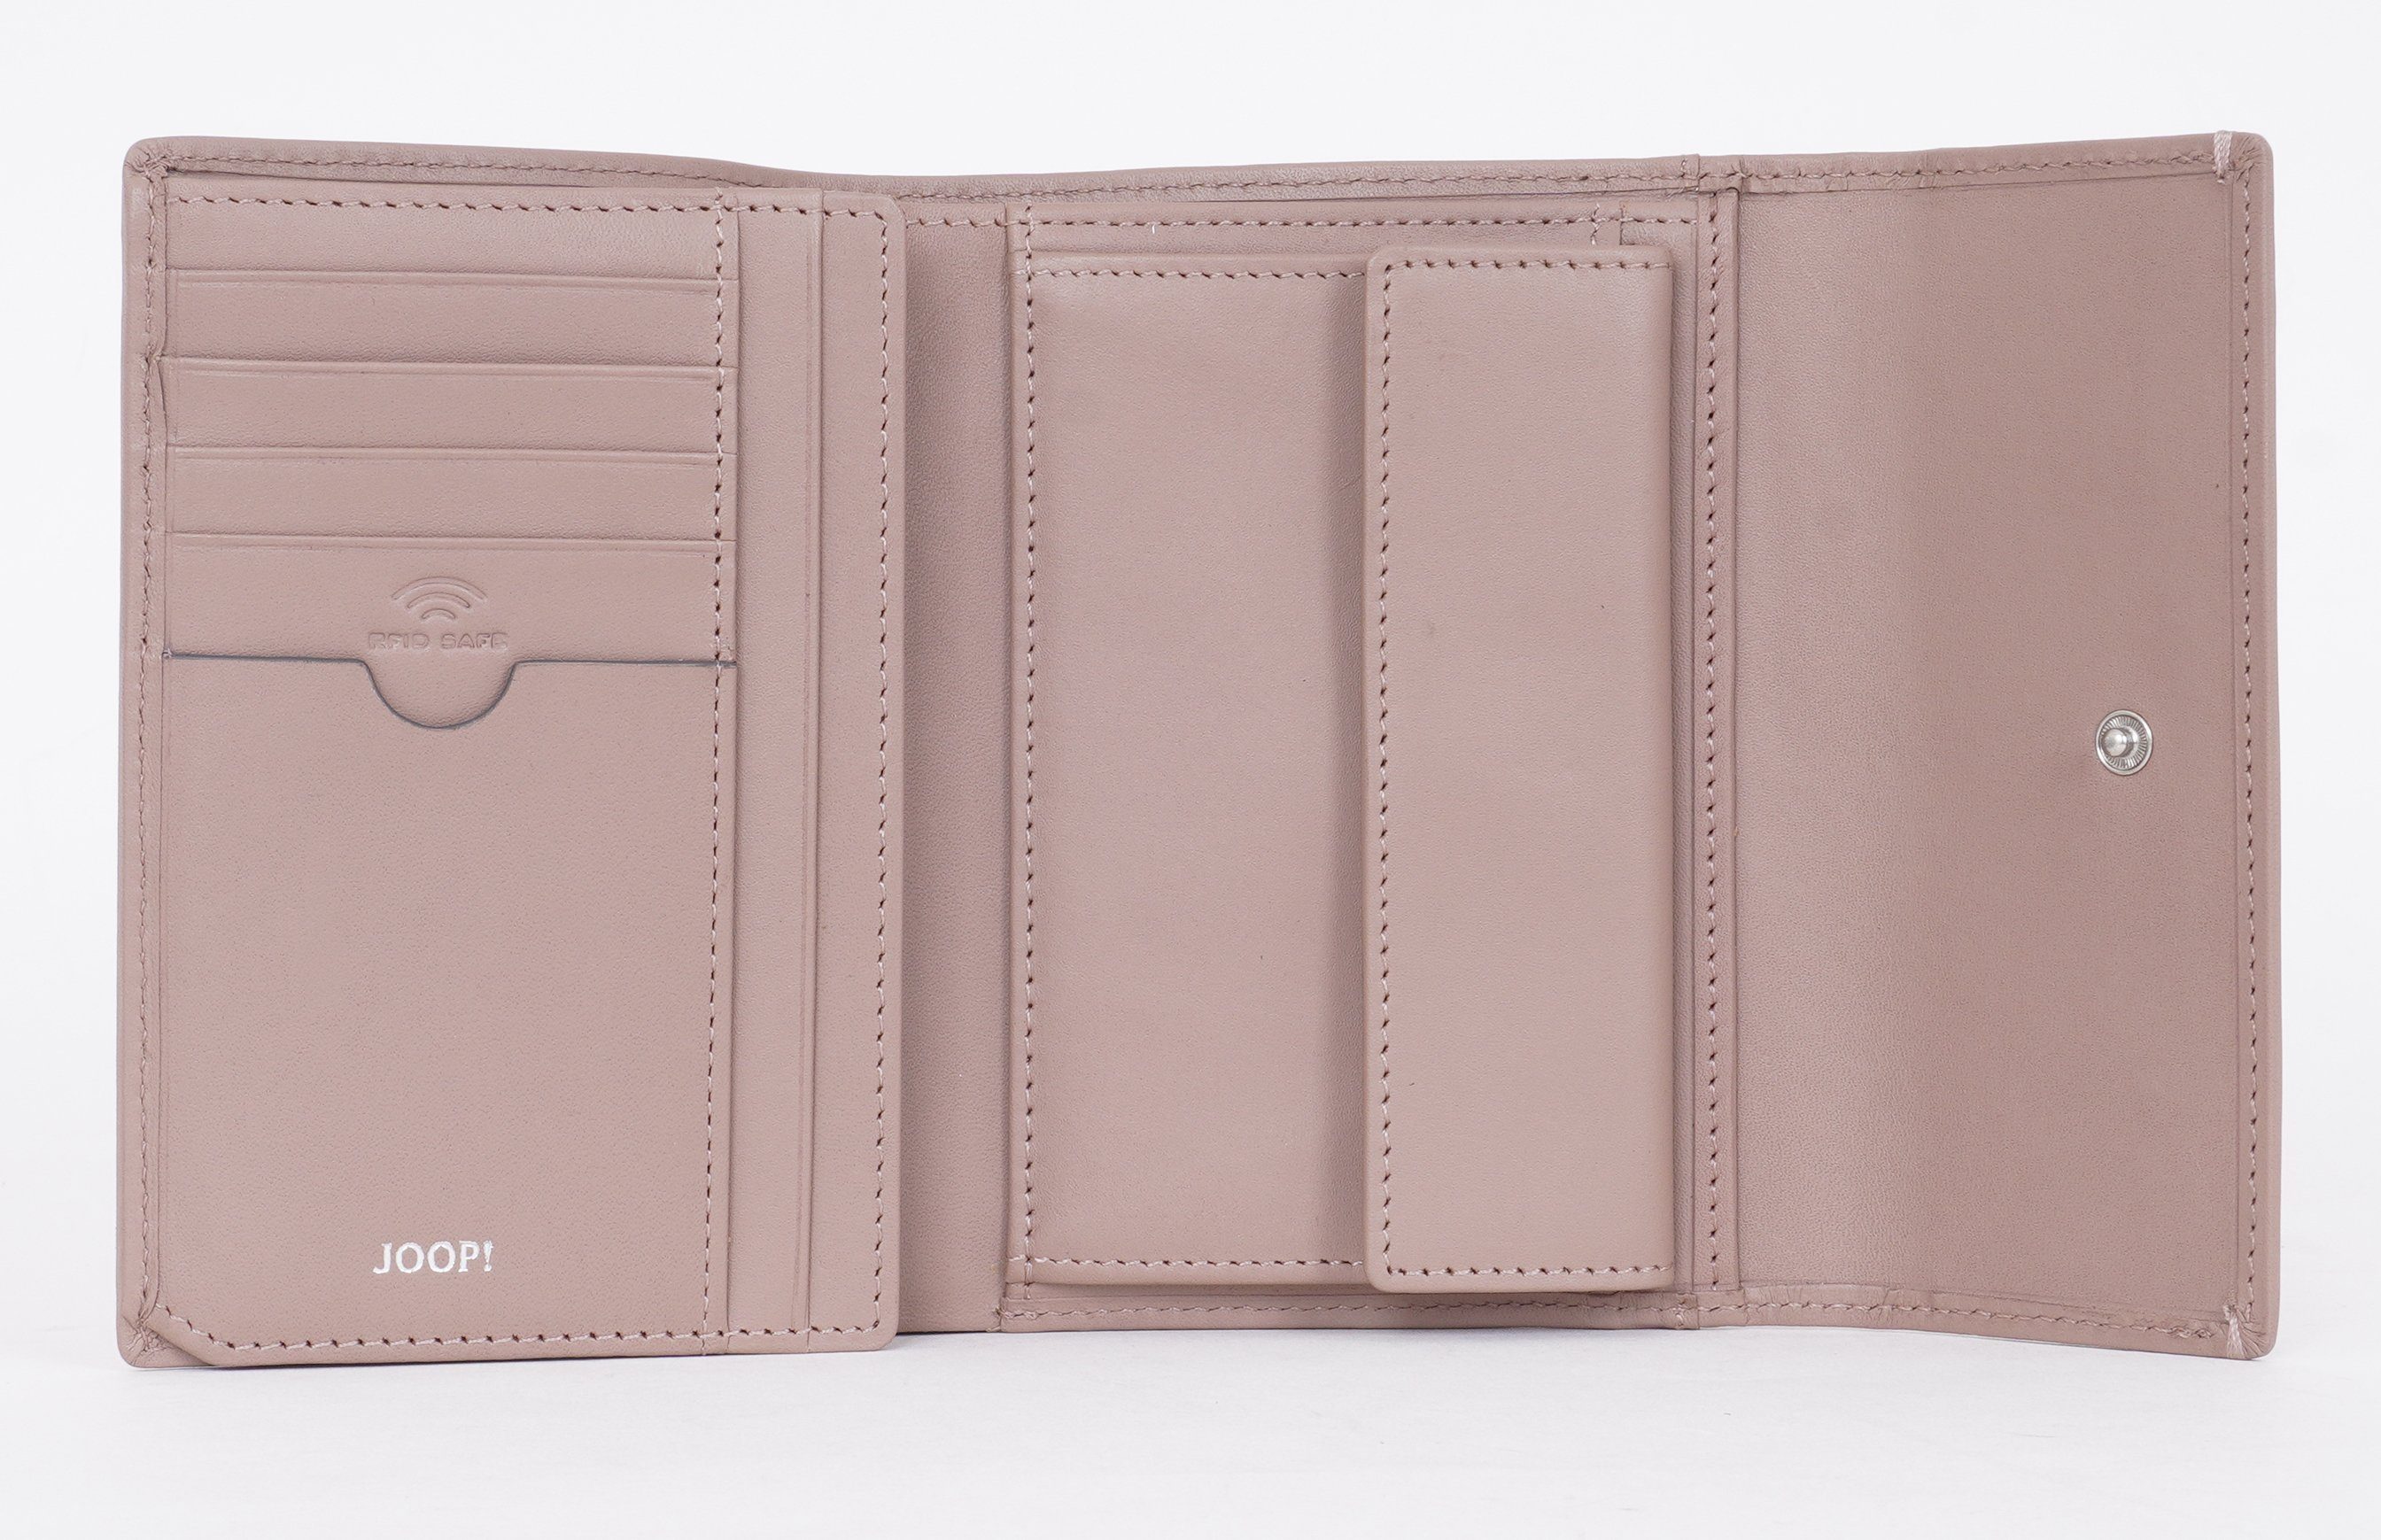 Joop! Geldbörse sofisticato 1.0 cosma rosa schlichtem Design mh10f, in purse